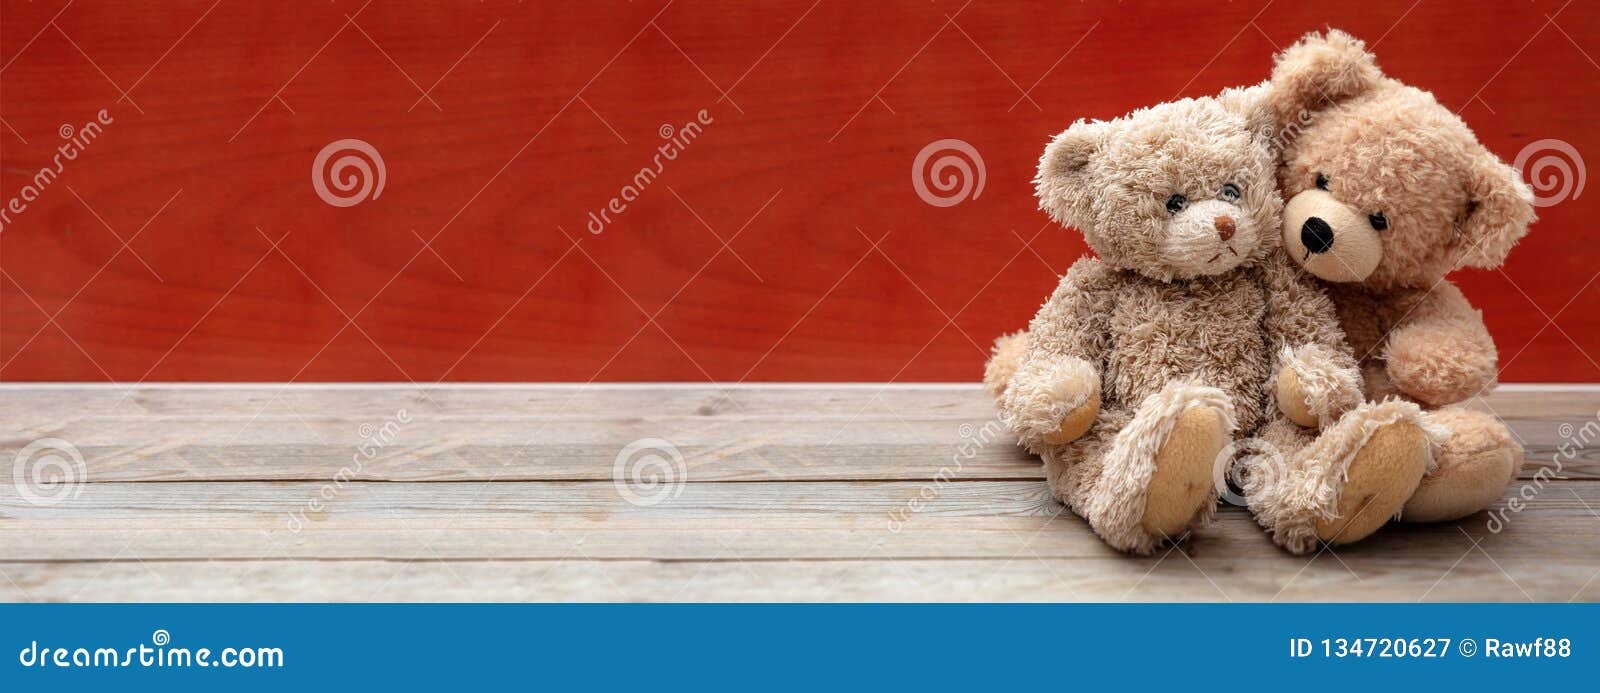 Love, Friendship Concept, Tight Hug. Teddy Bears Couple on Wooden ...